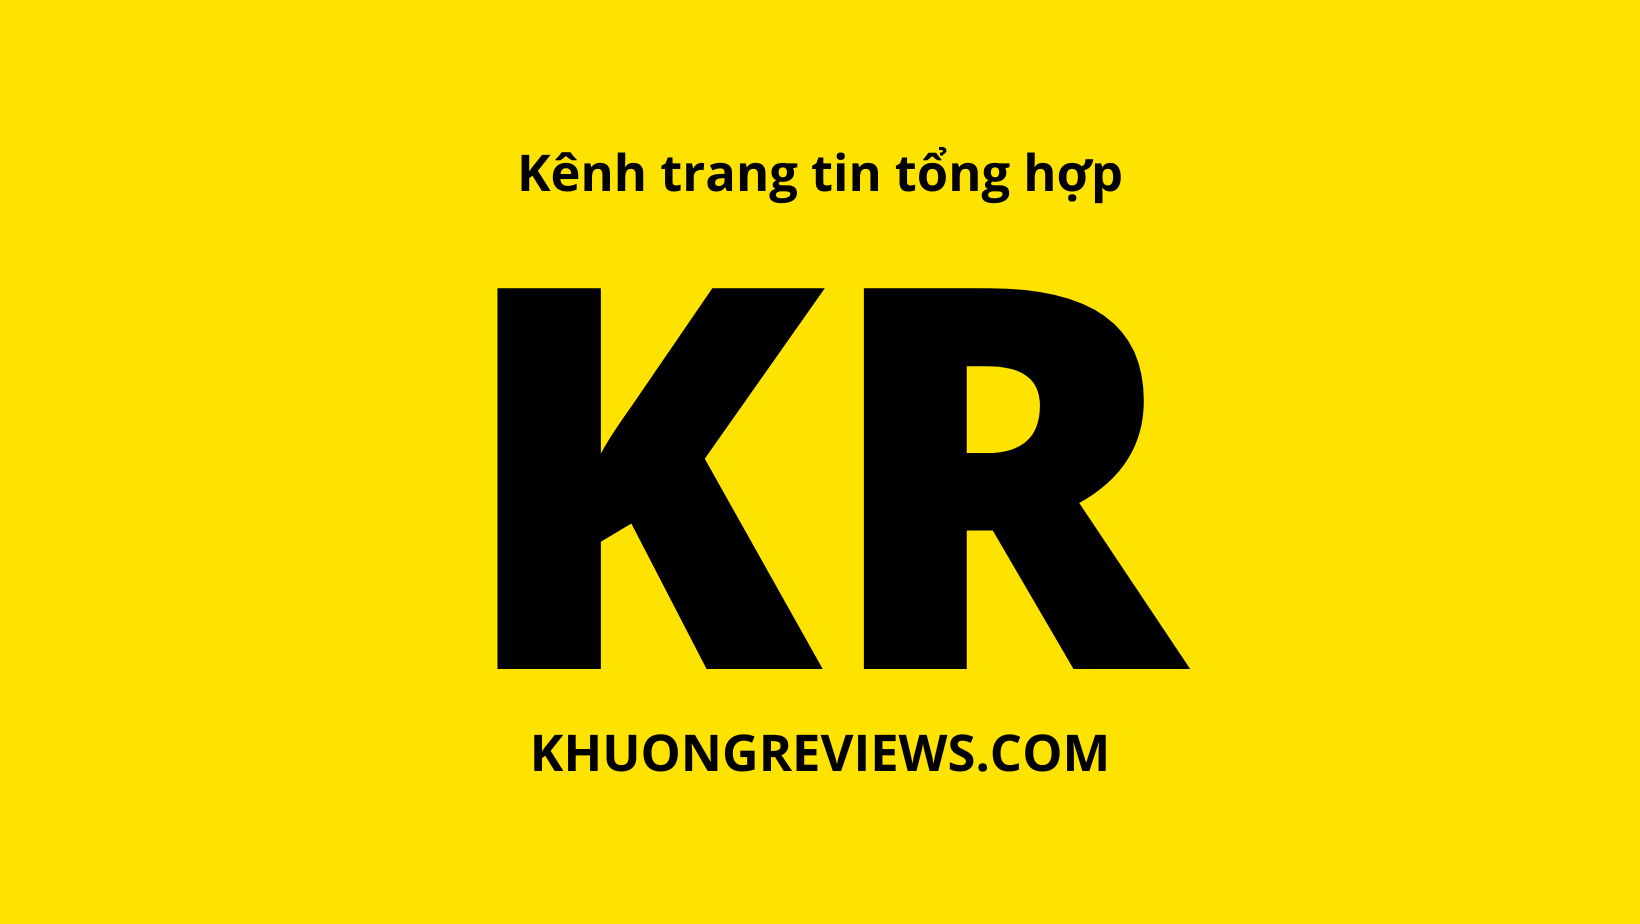 Khuongreviews.com Cover- Banner